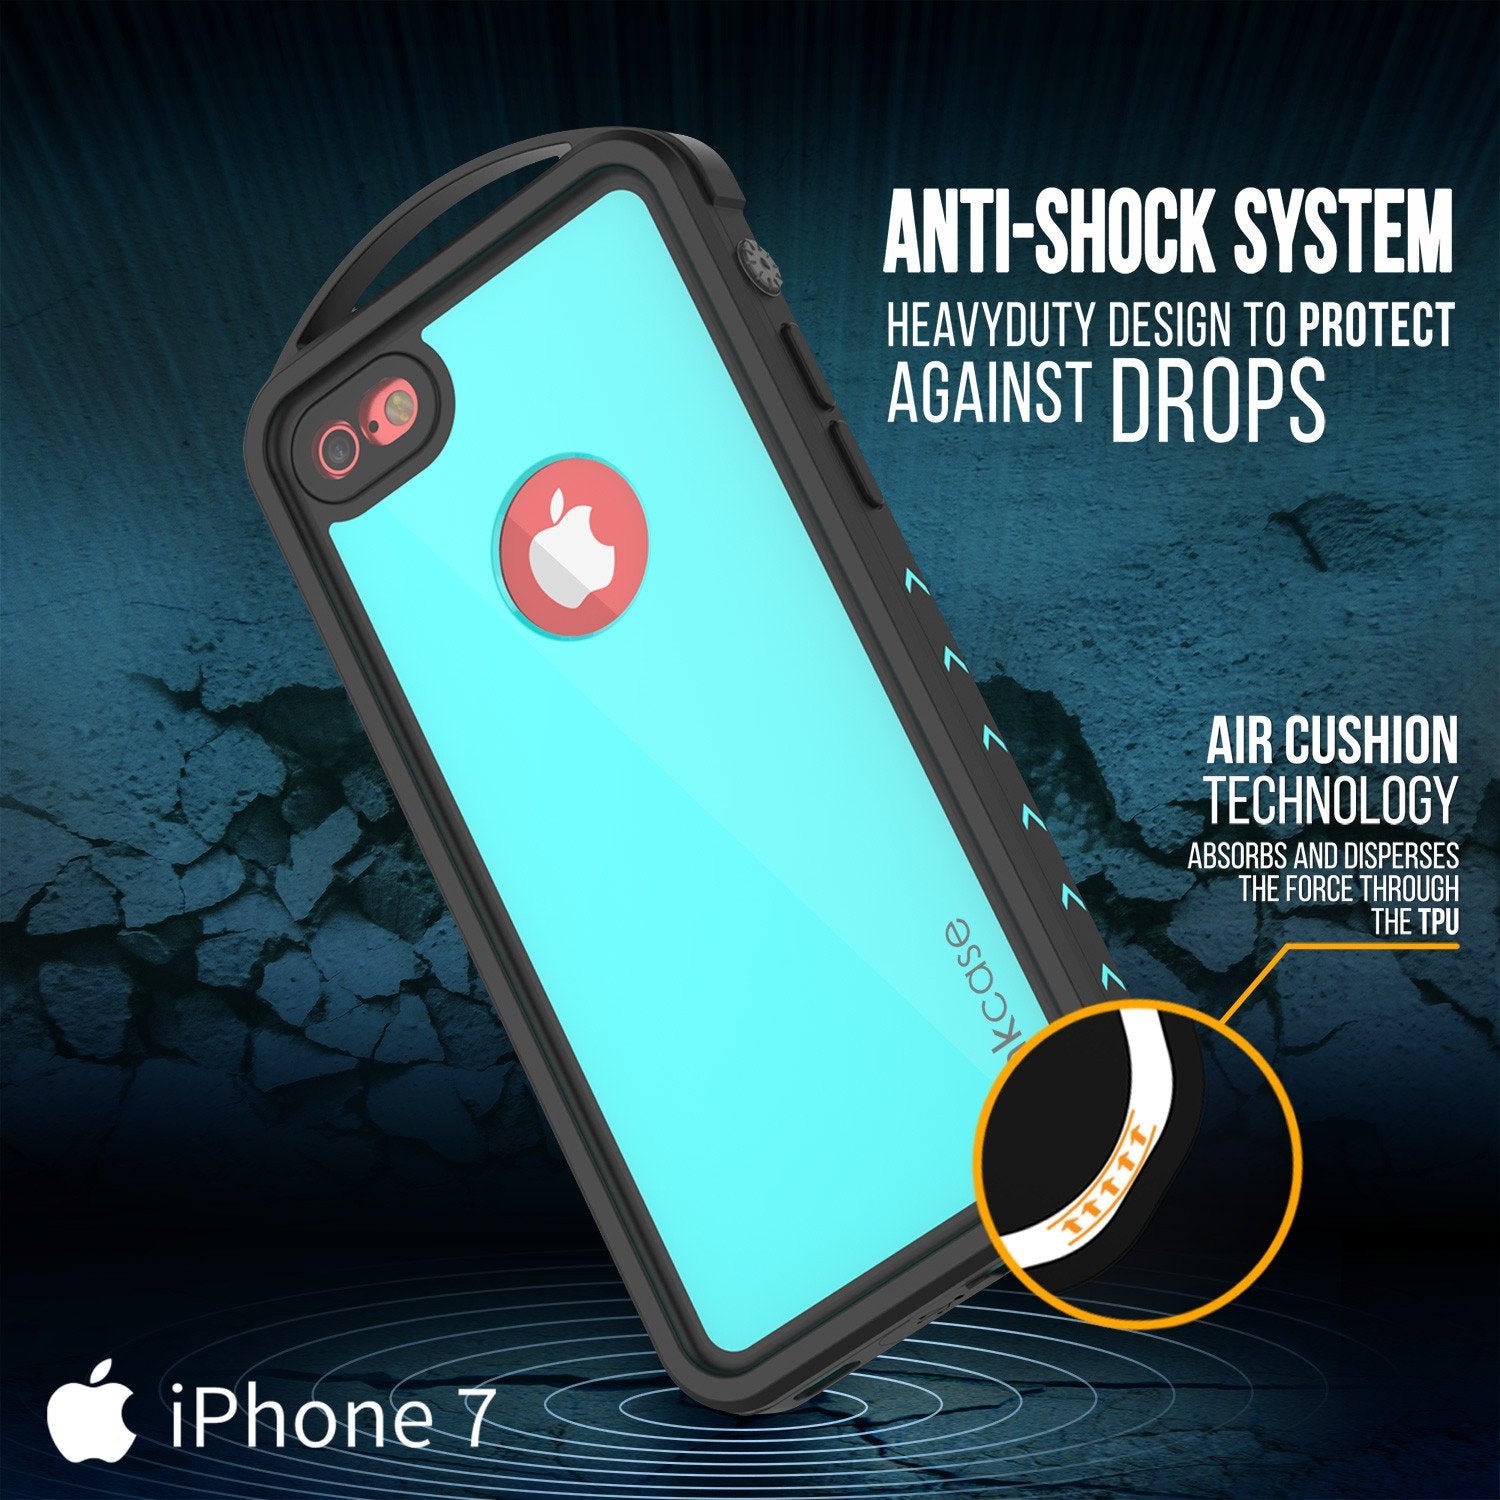 iPhone 7 Waterproof Case, Punkcase ALPINE Series, Teal | Heavy Duty Armor Cover